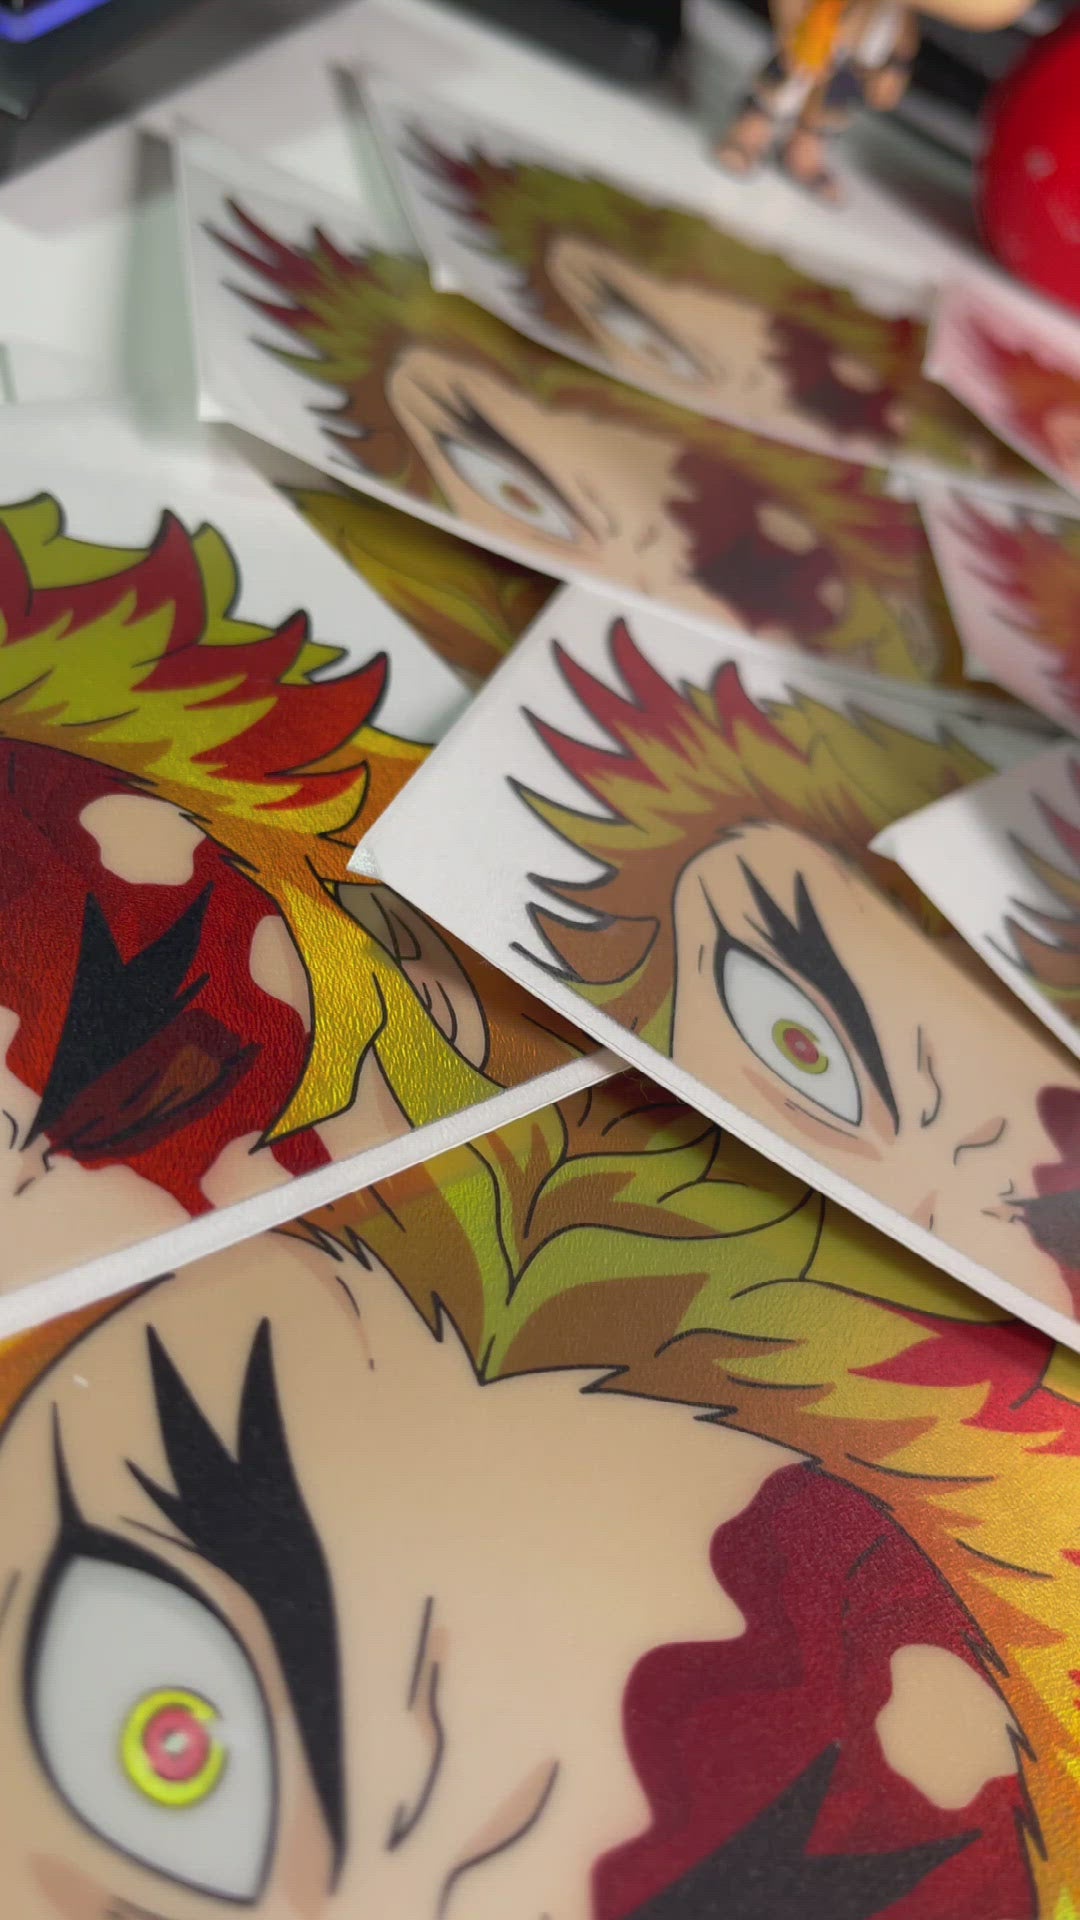 Oni Flame Pillar Hashira Demon Anime Waterproof Vinyl Sticker 